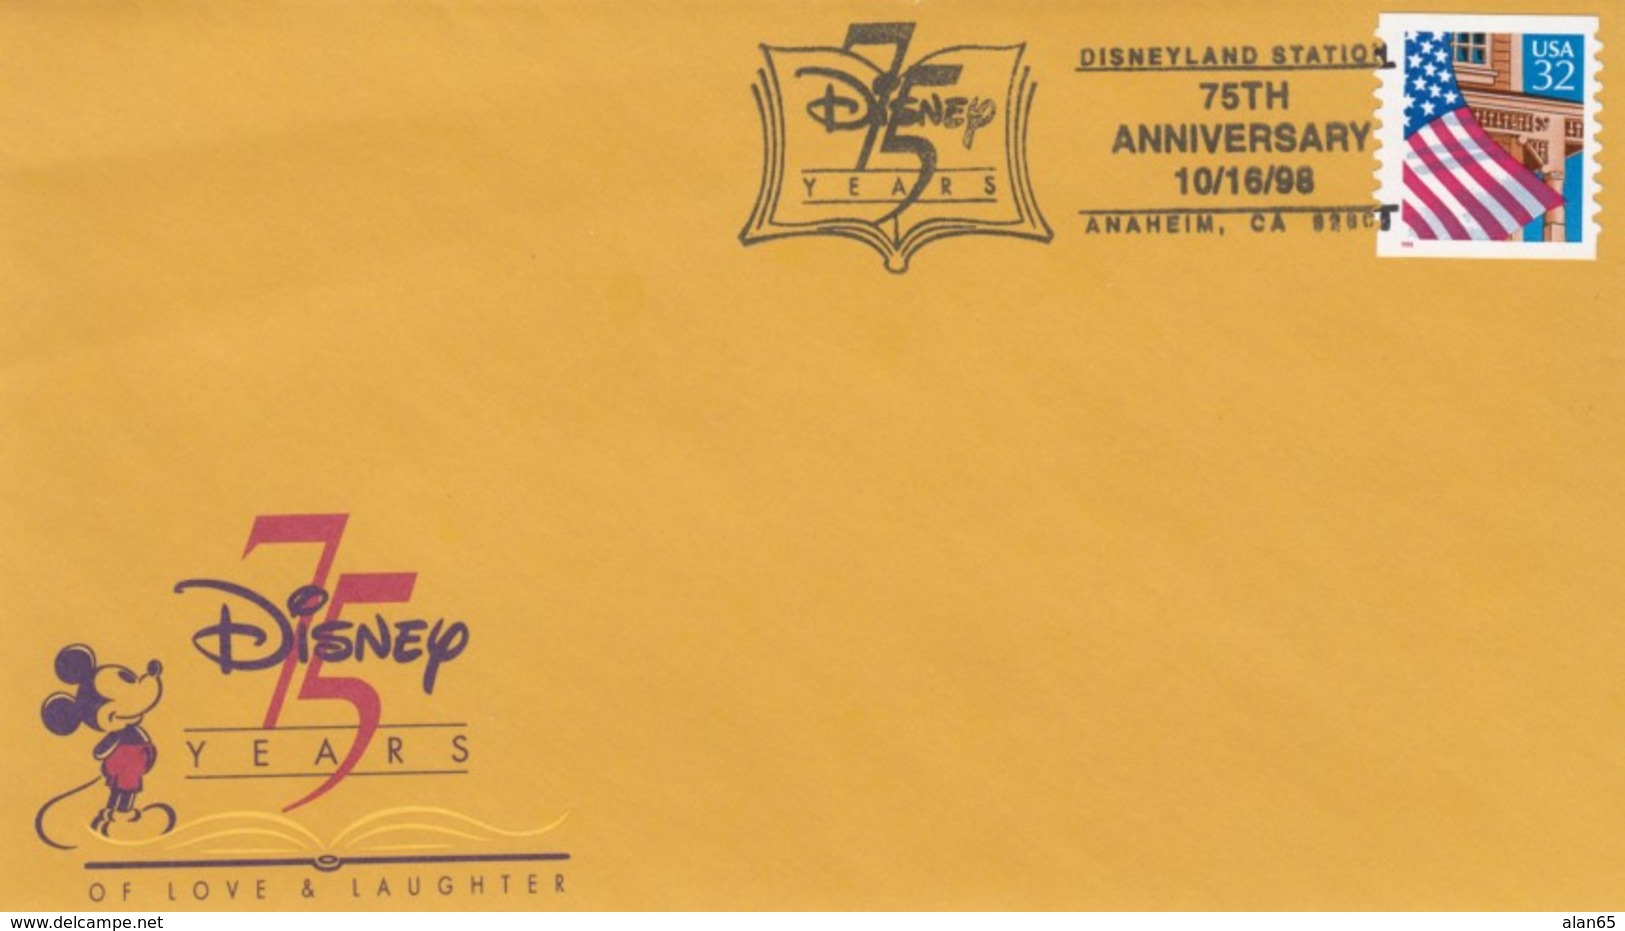 75 Year Disney Anniversary Sc#2913 Flag 32c Issue Disneyland Station Anaheim California Postmark, Illustrated 1998 Cover - Disney